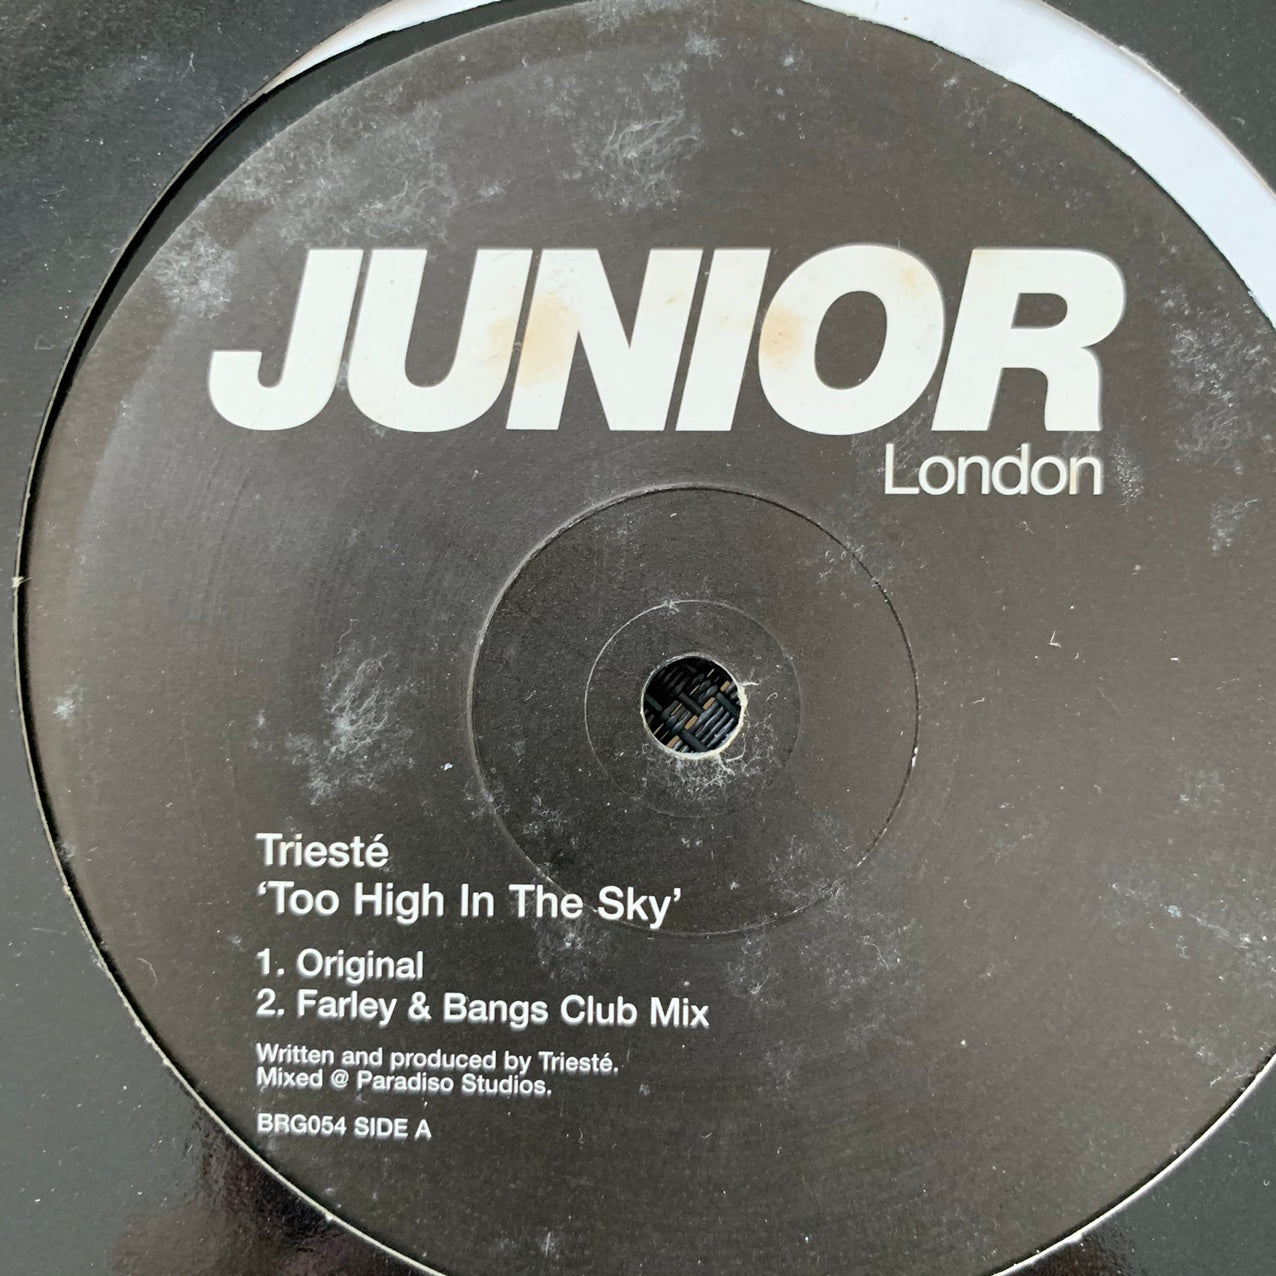 Trieste “Too High In The Sky” 2 version 12inch Vinyl